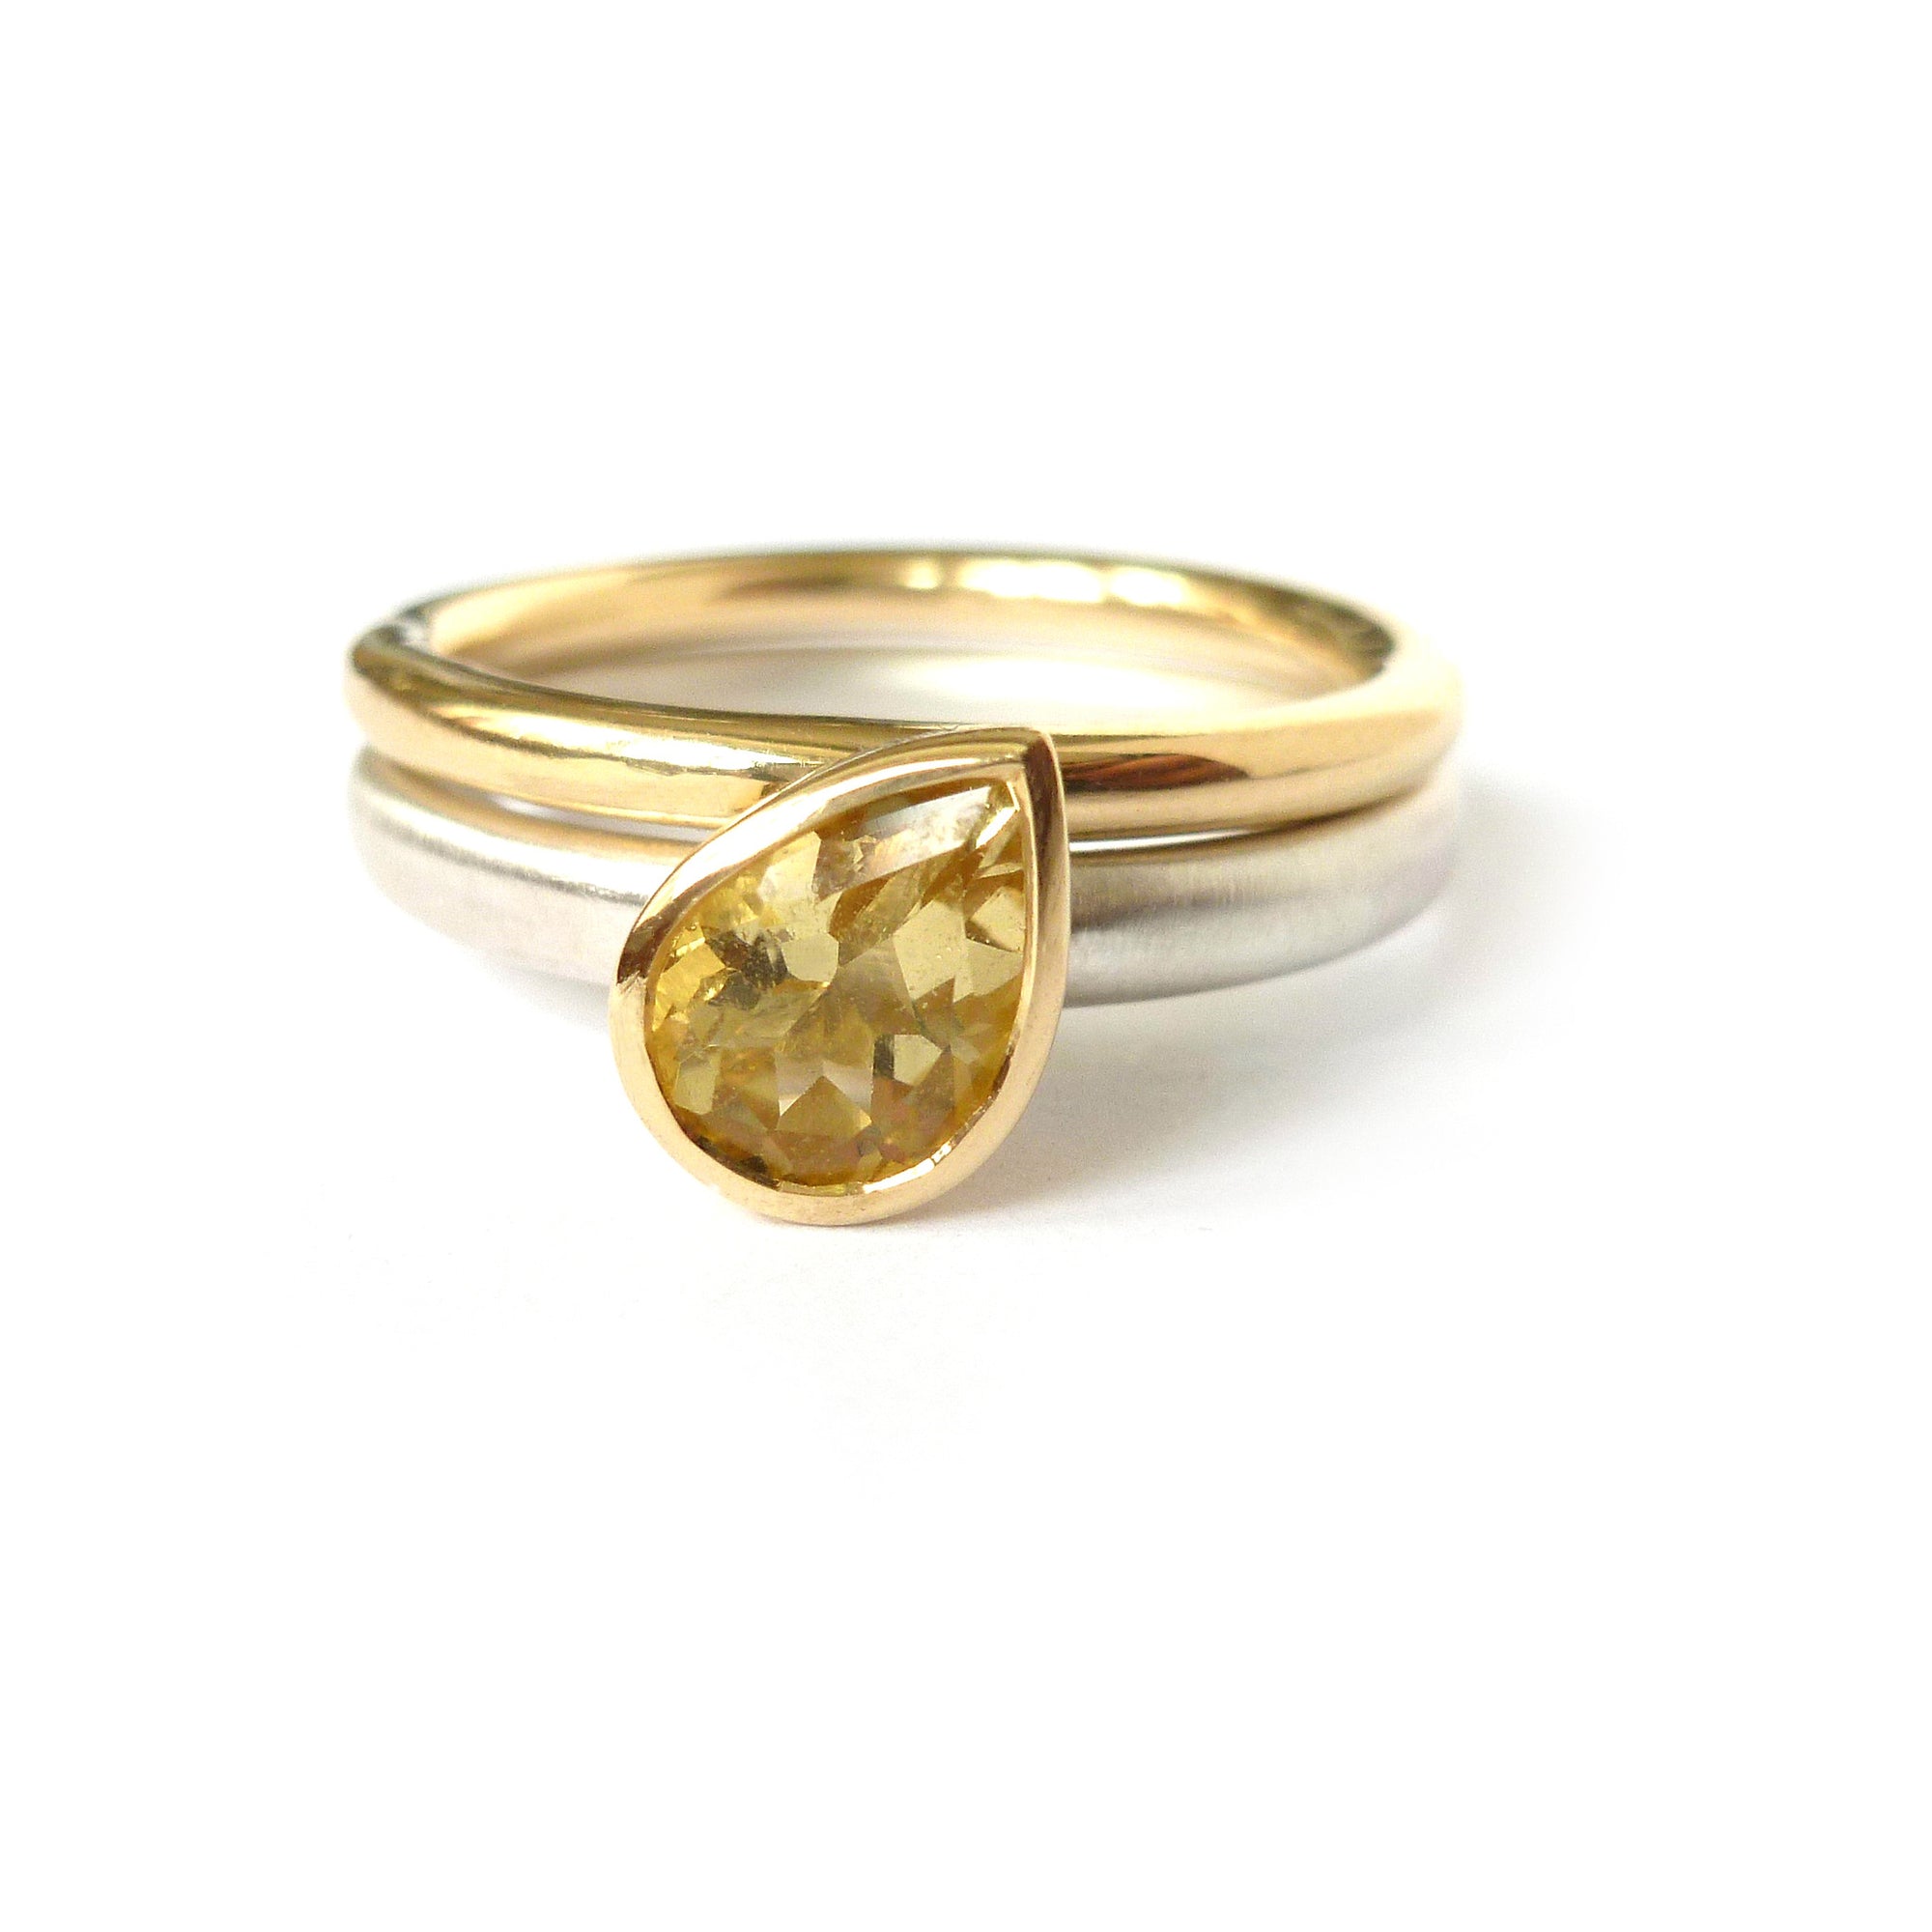 handmade modern yellow sapphire ring, by Uk designer and maker